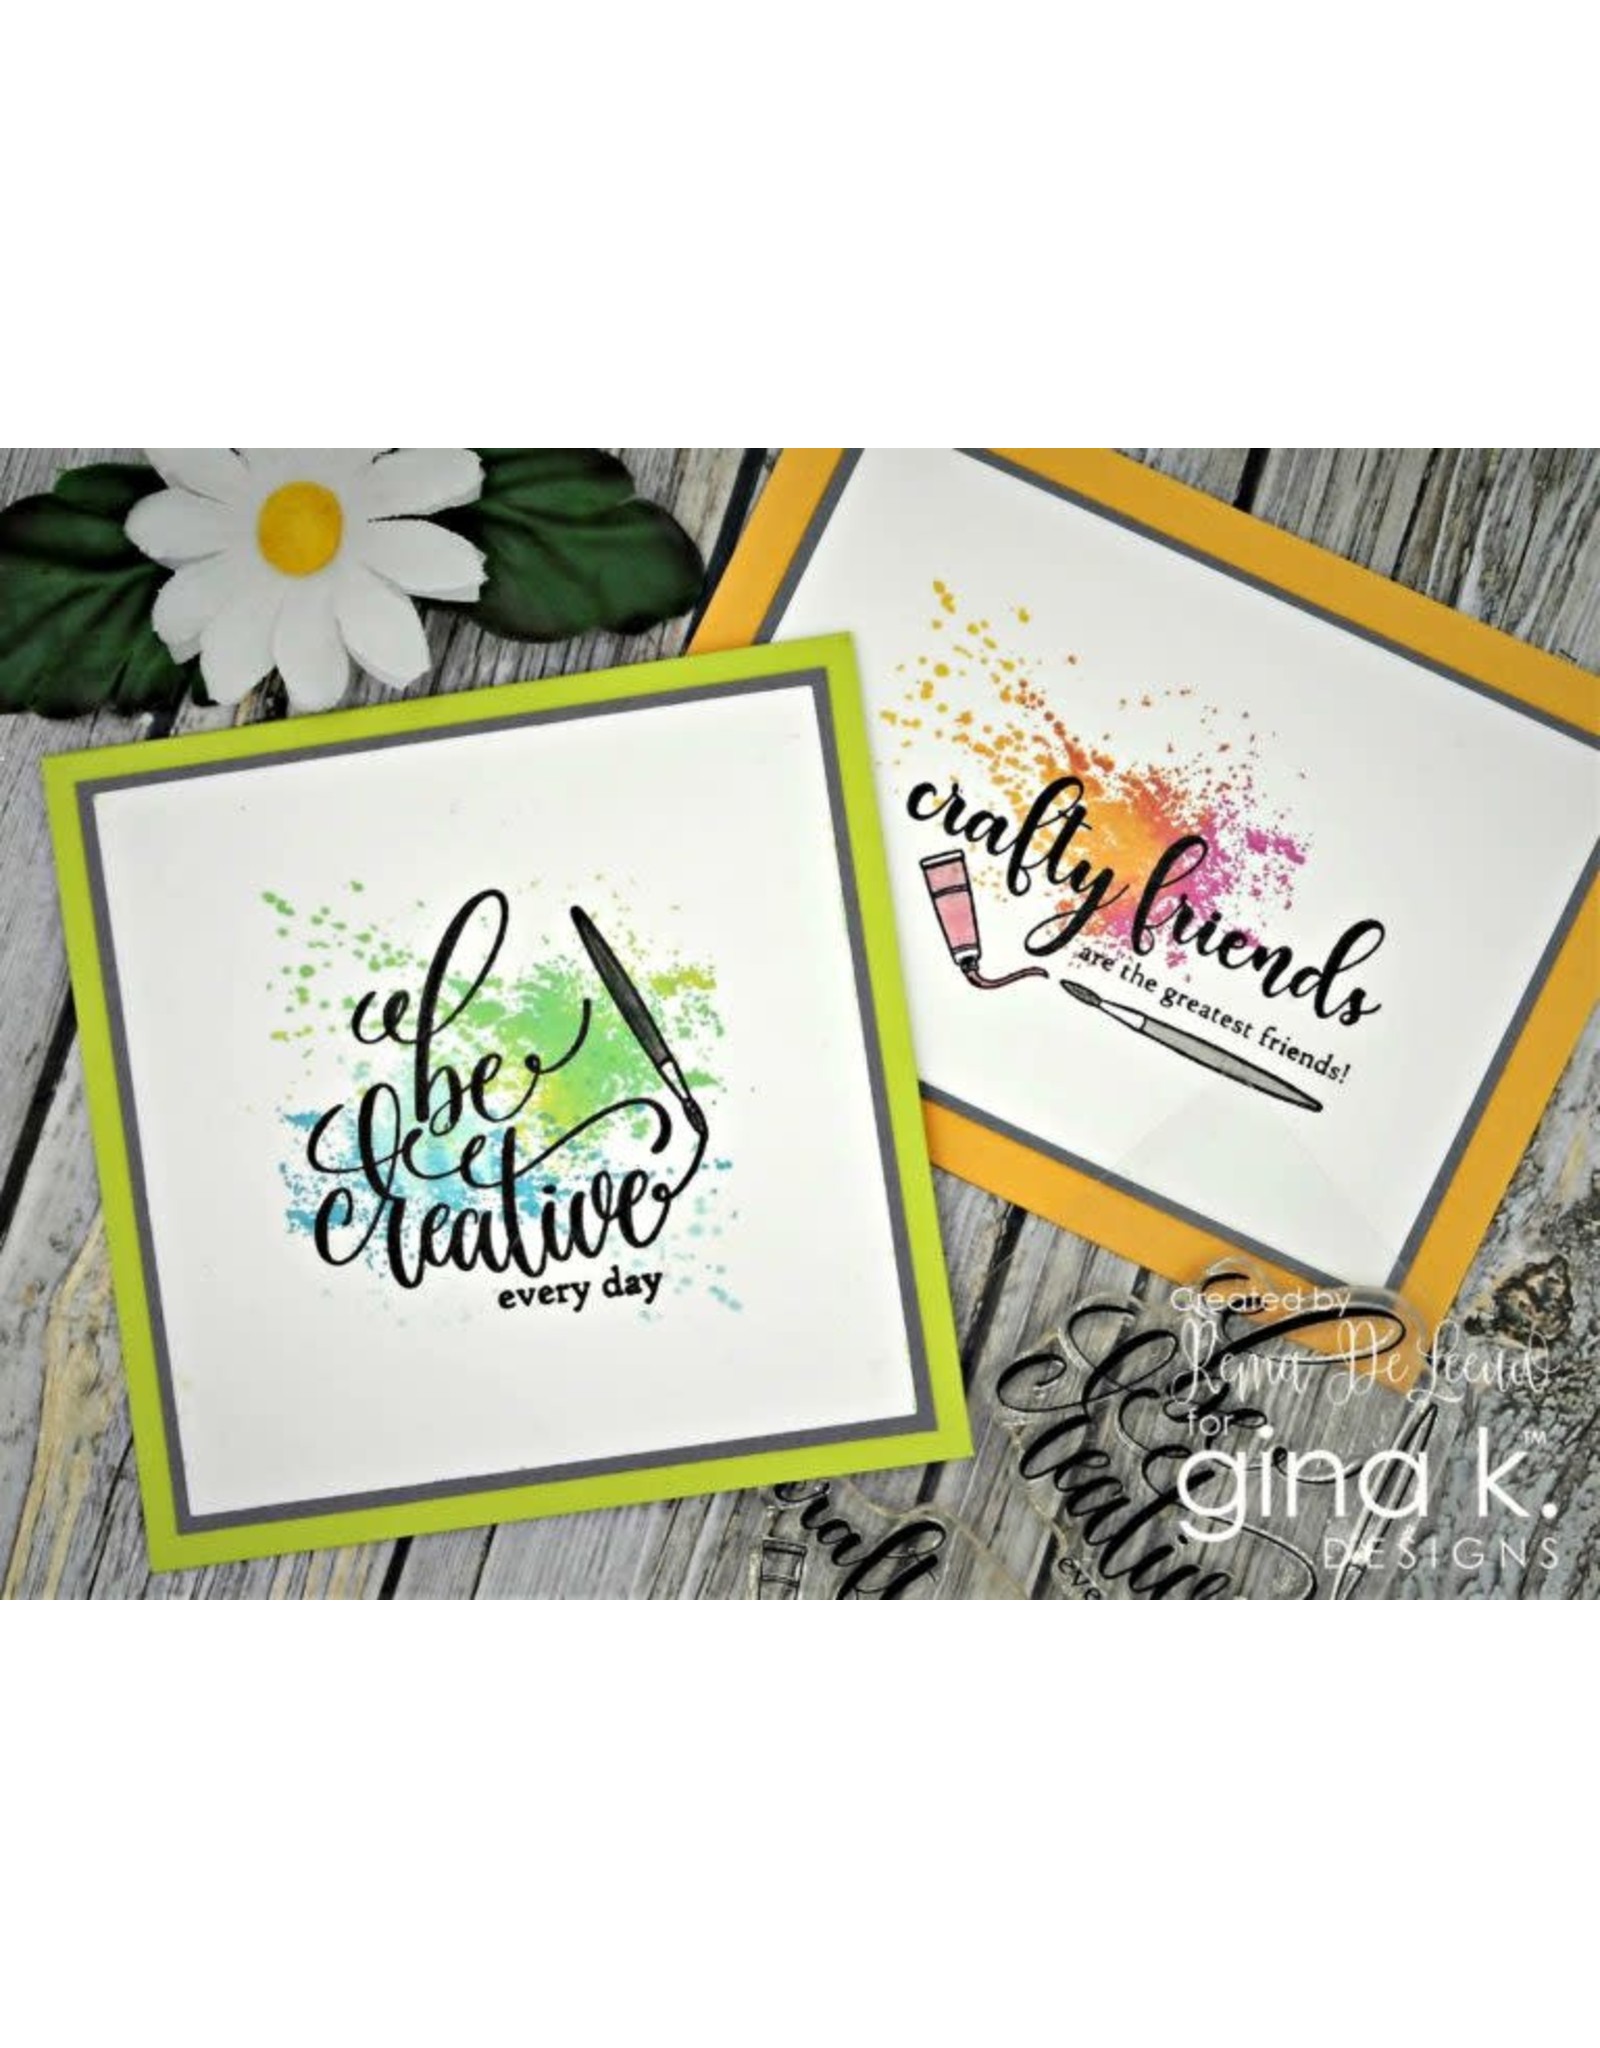 Gina K. Designs Crafty and Creative MINI Stamp